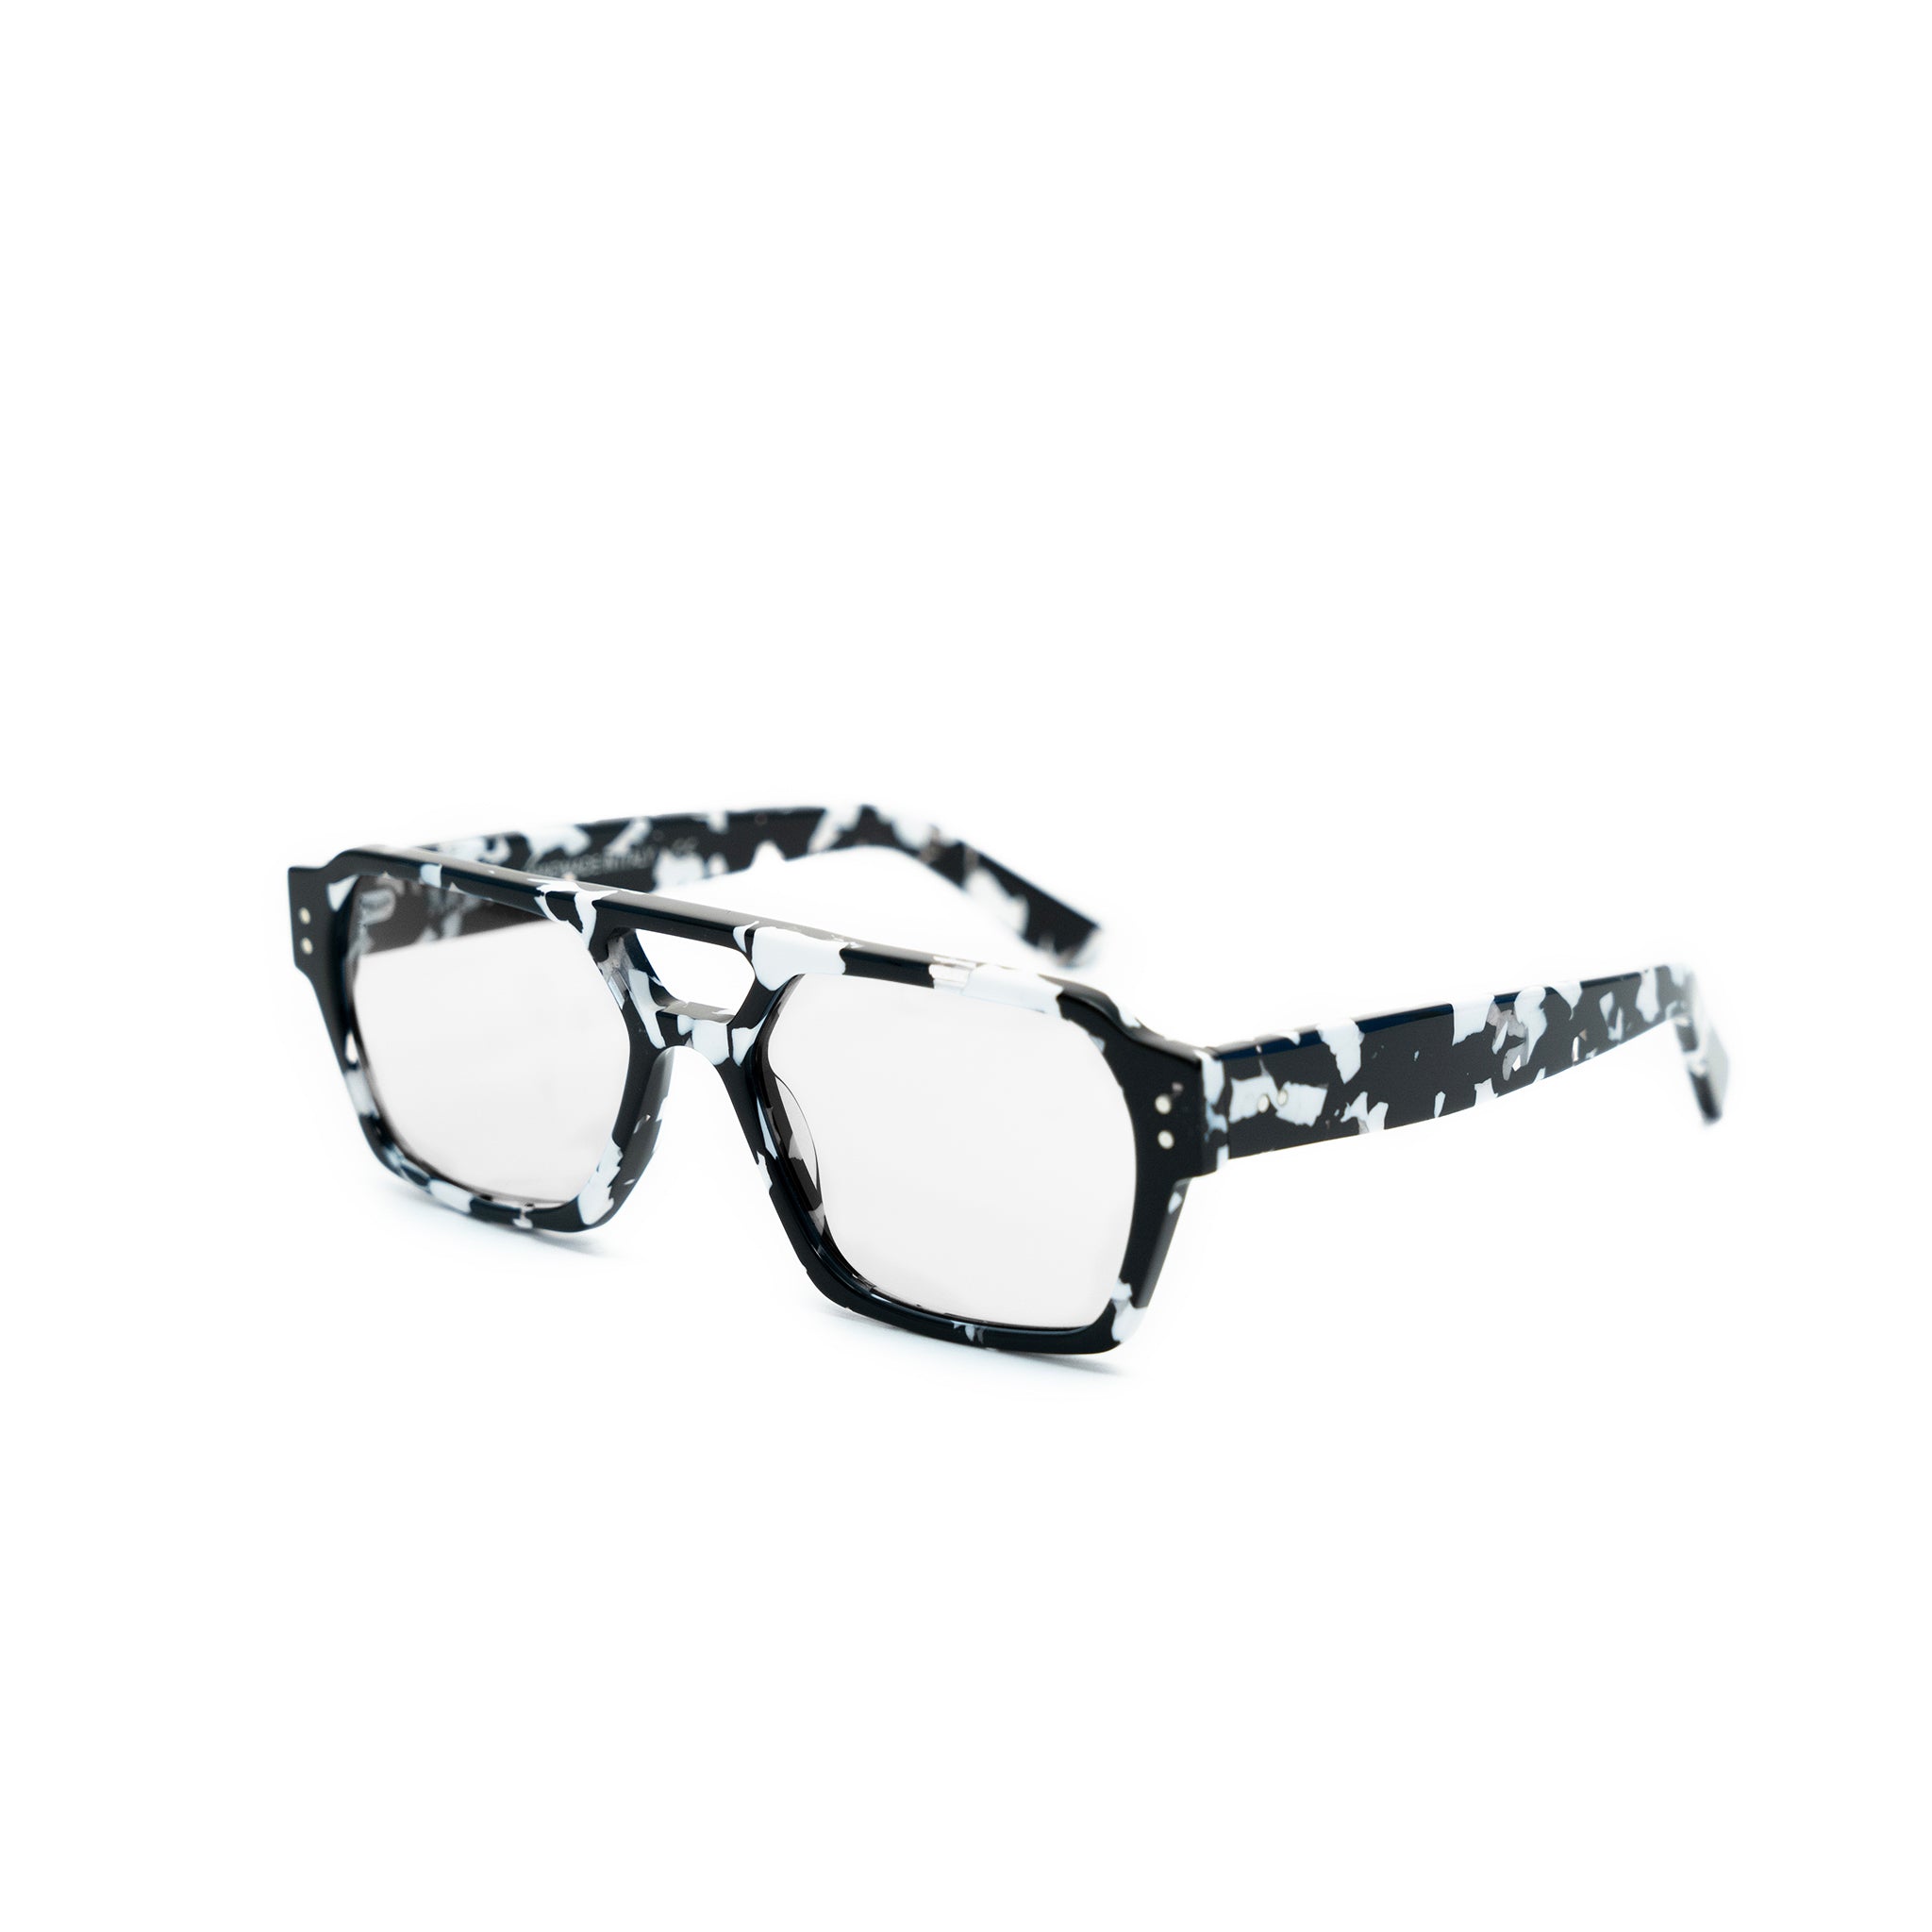 Ego optical glasses in black & white from Ameos Eyewear.